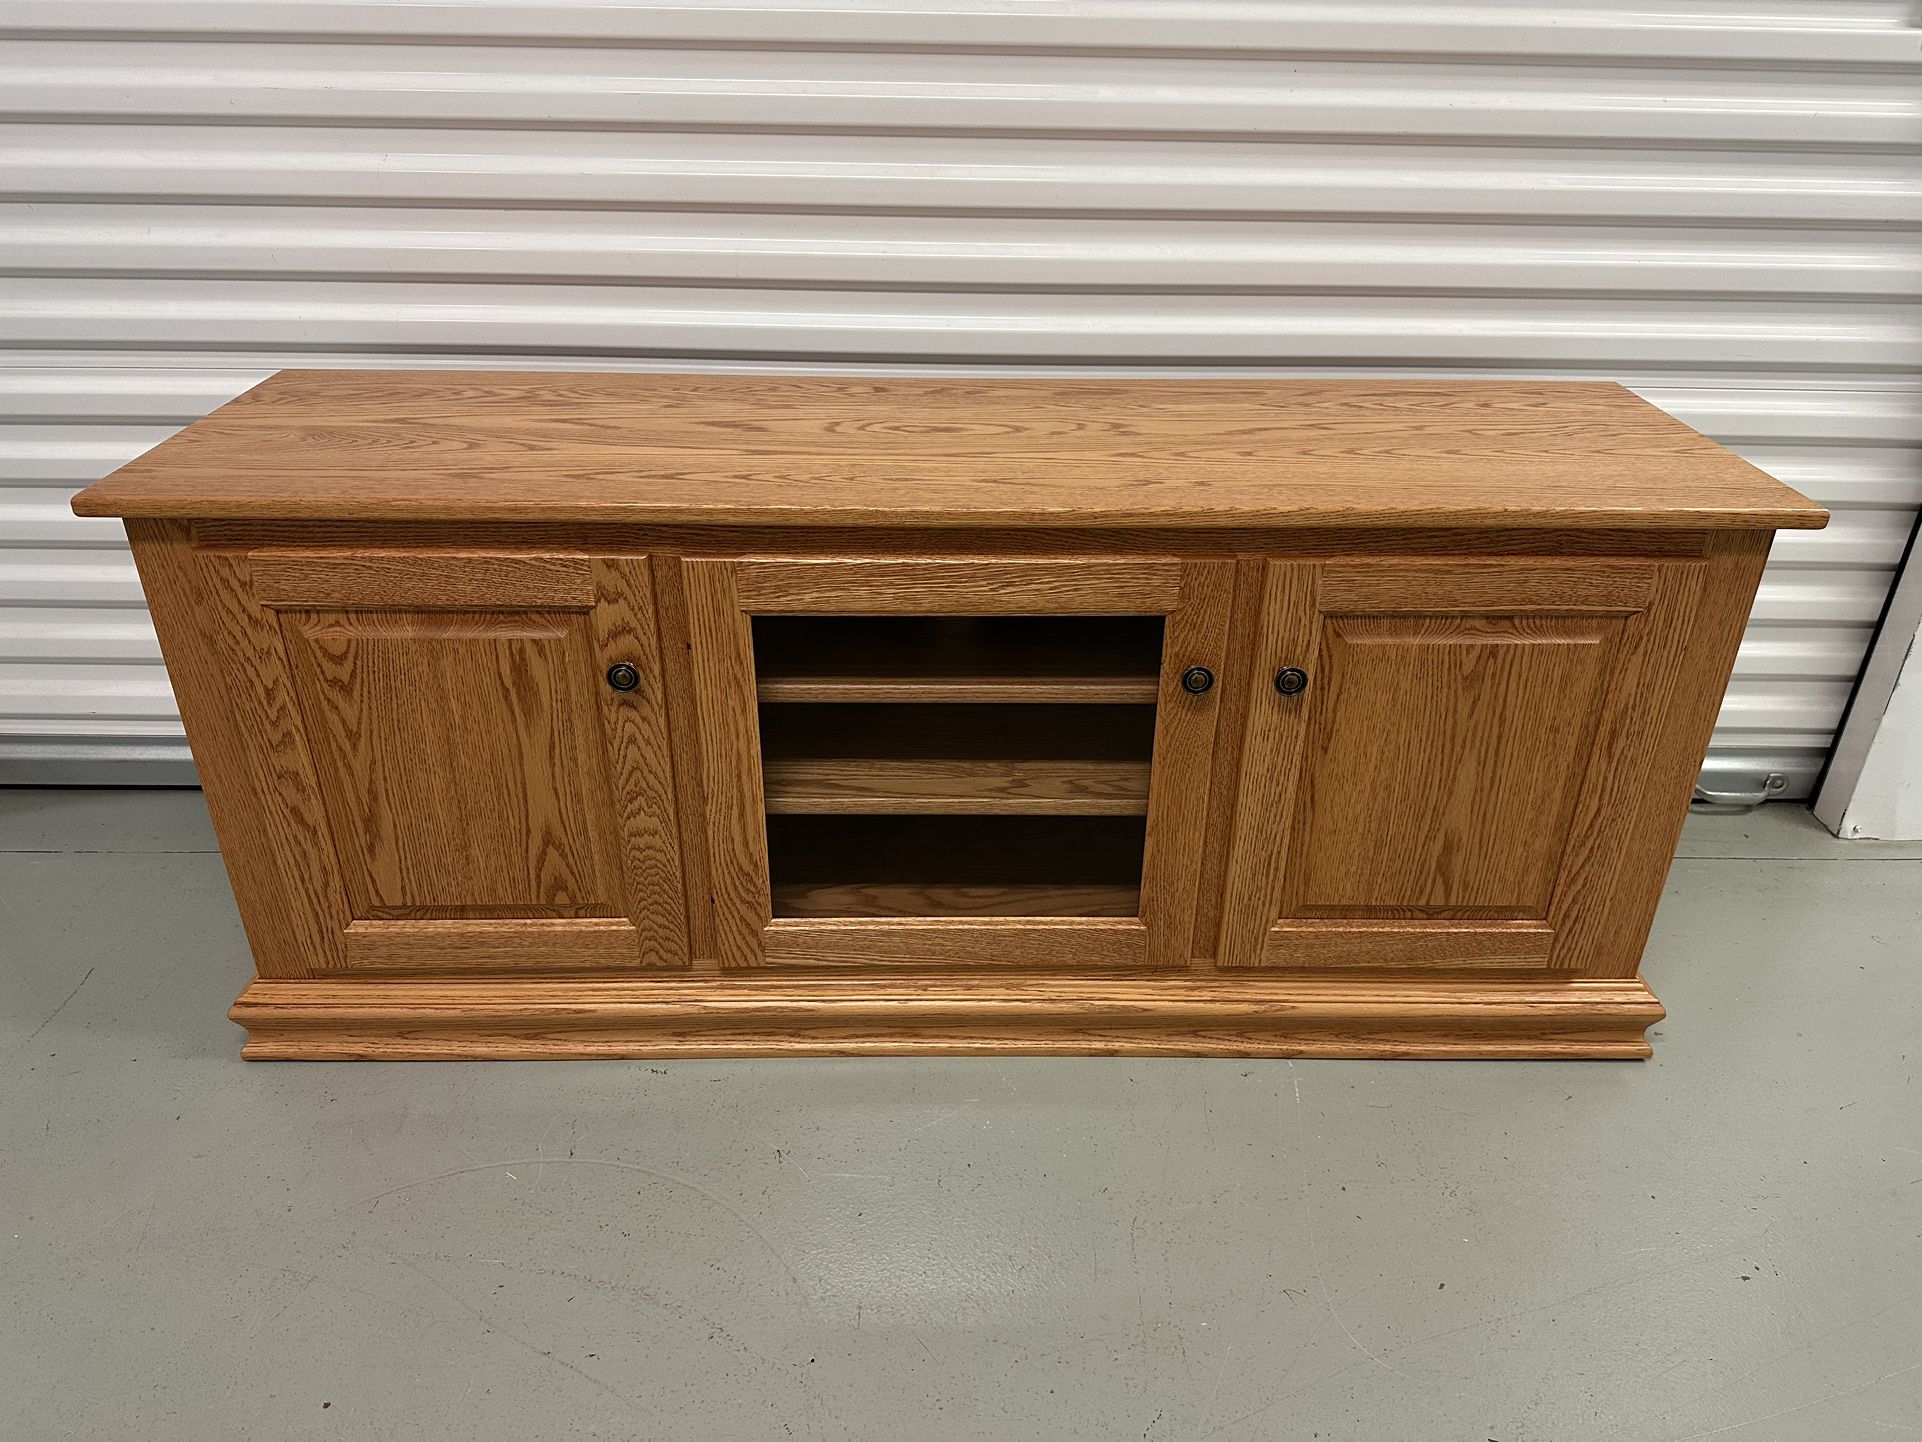 Solid Wood TV Stand Cabinet w/ Adjustable Shelves